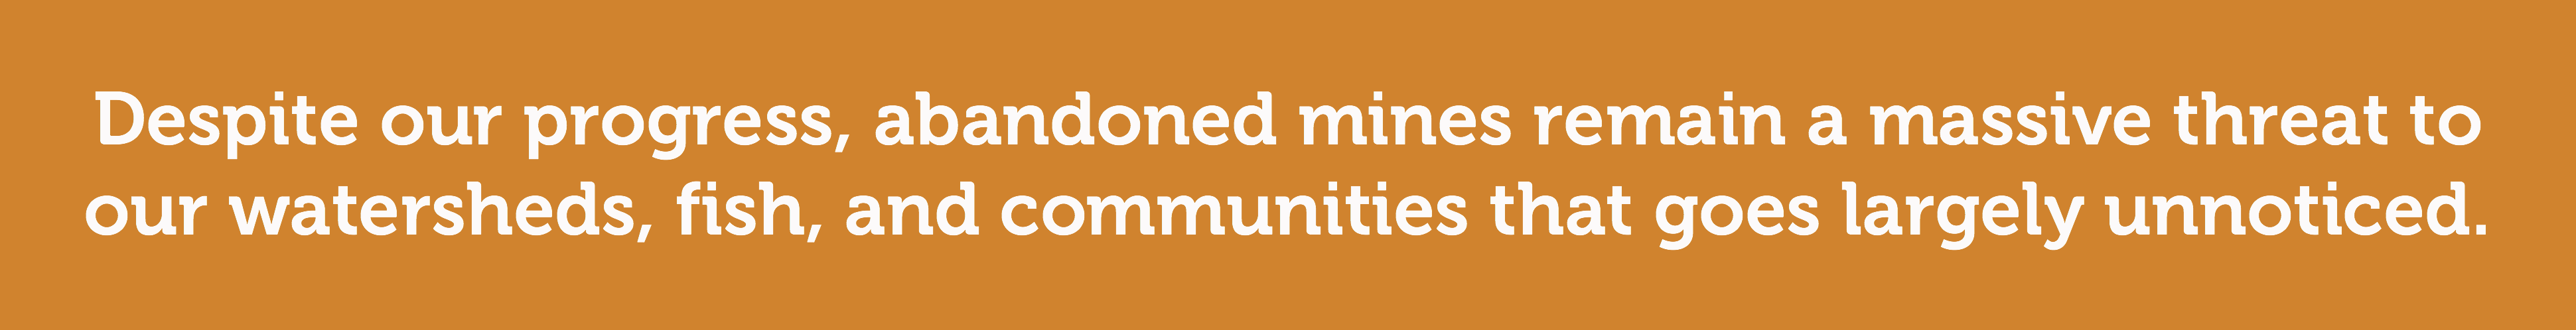 Despite our progress, abandoned mines remain a massive threat.